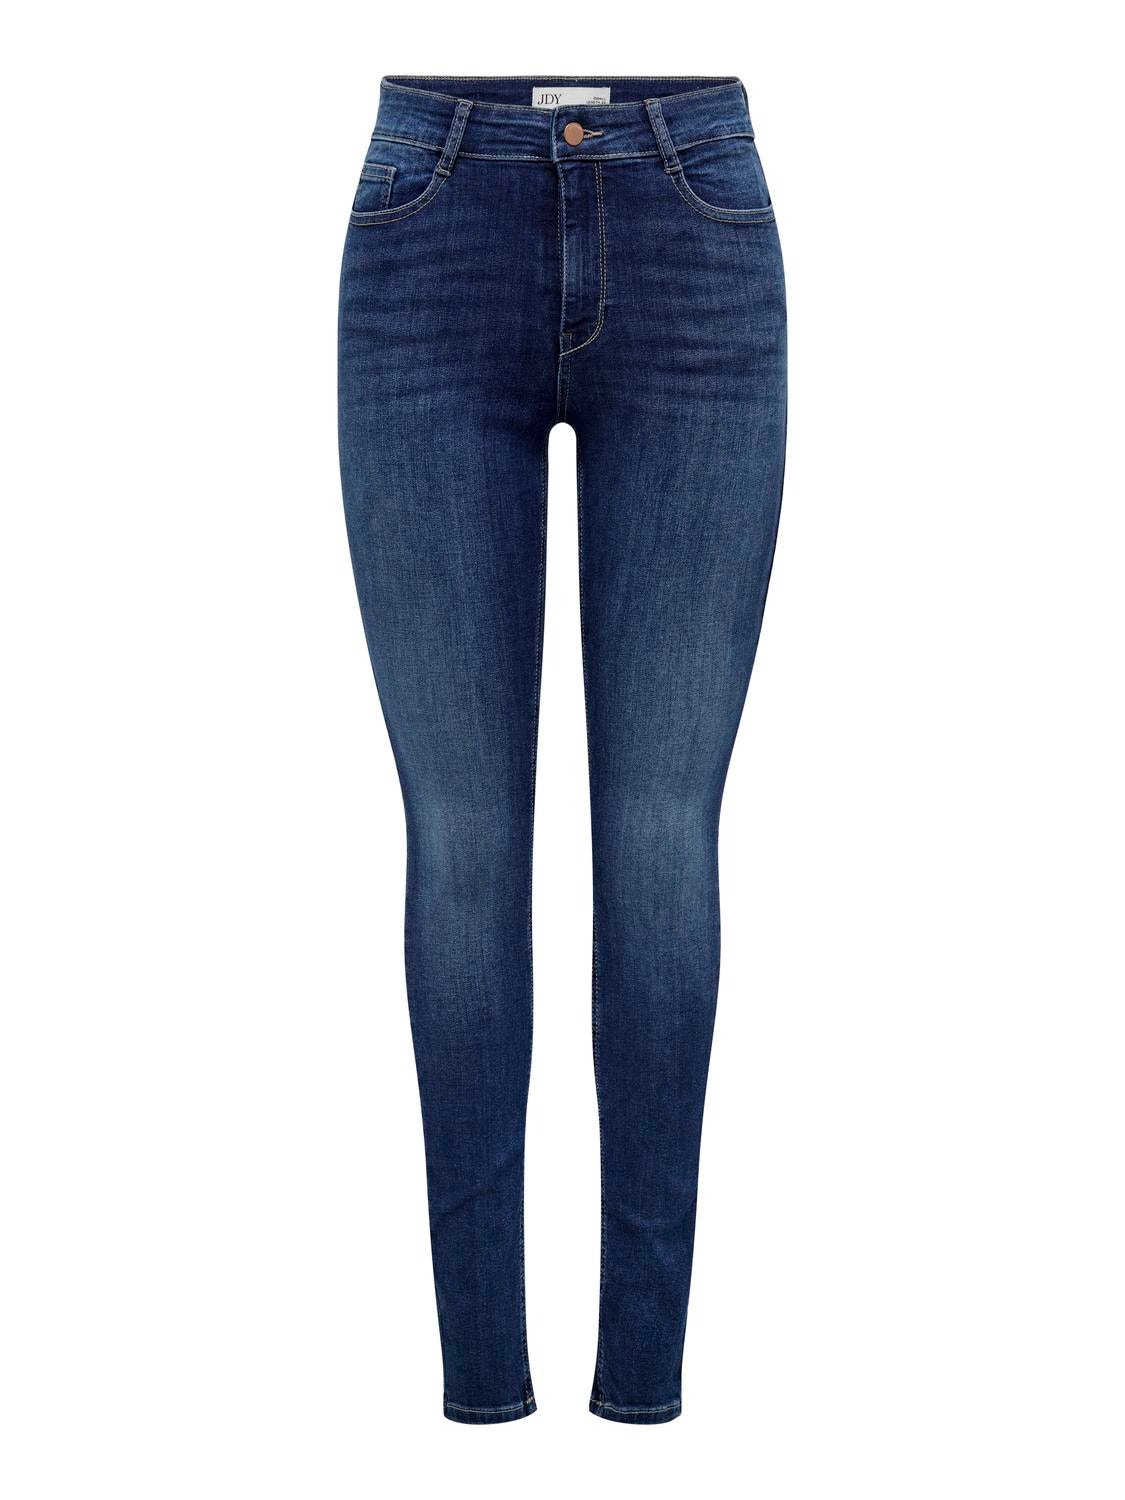 ONLY Skinny Fit Jeans -Dark Blue Denim - 15266307